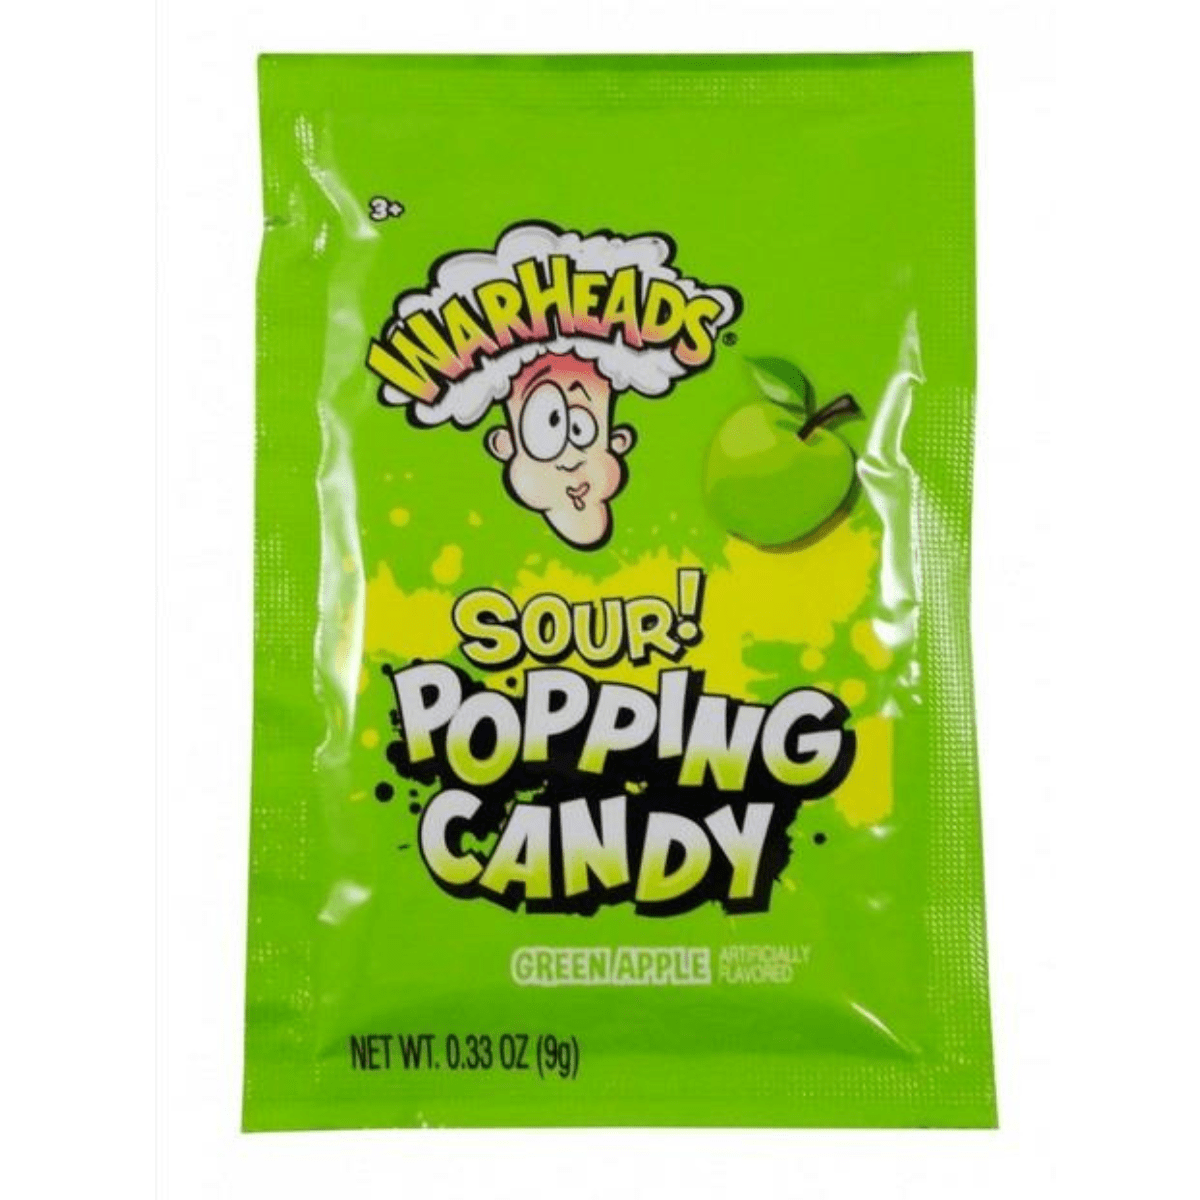 Warheads Sour pop candy, Green Apple